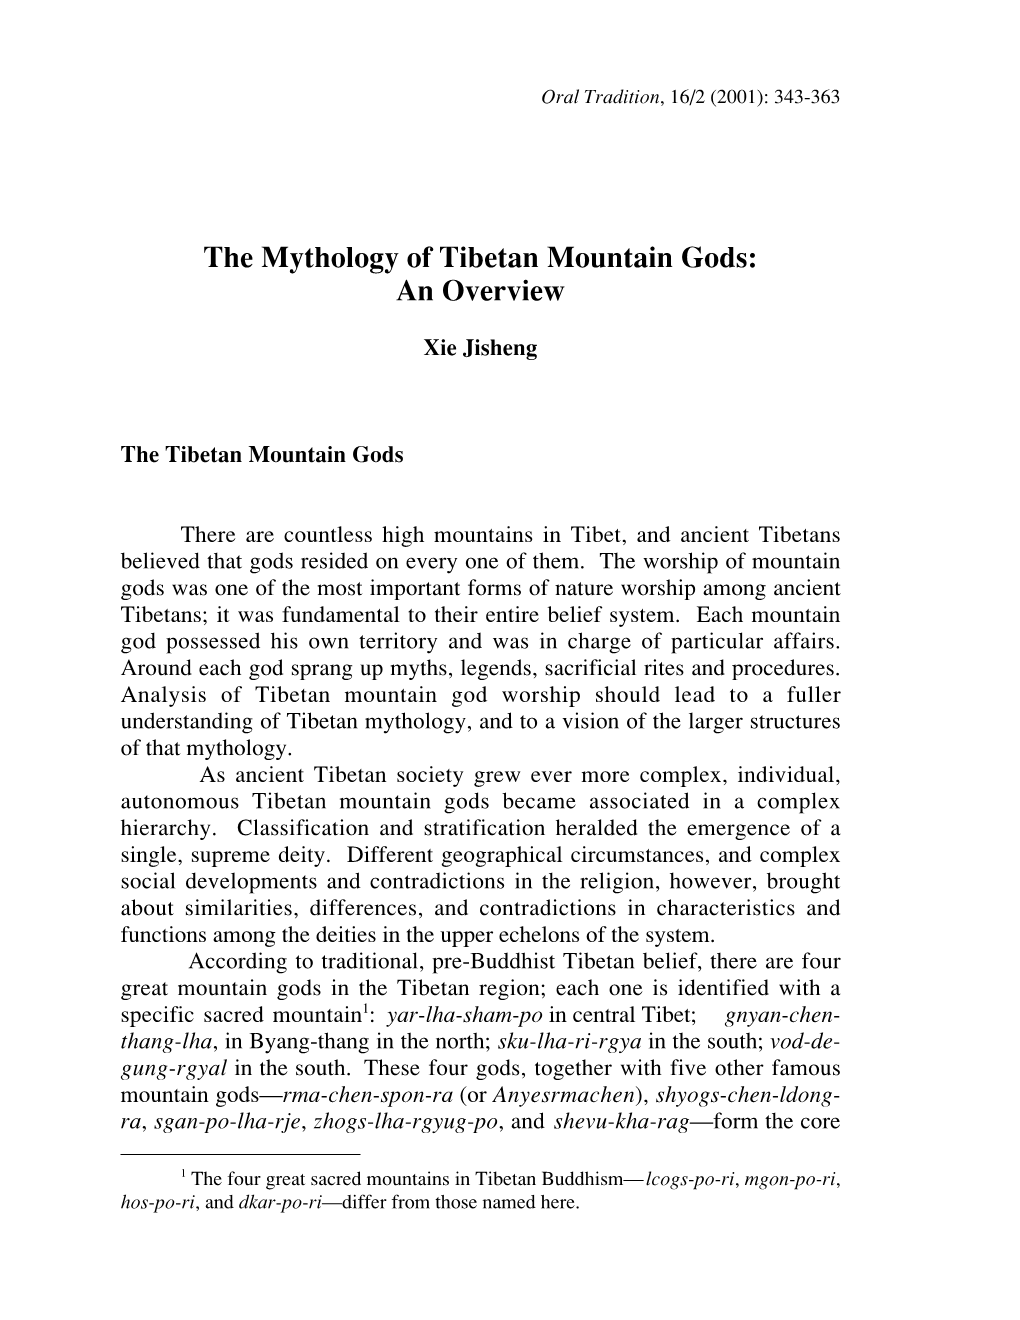 The Mythology of Tibetan Mountain Gods: an Overview